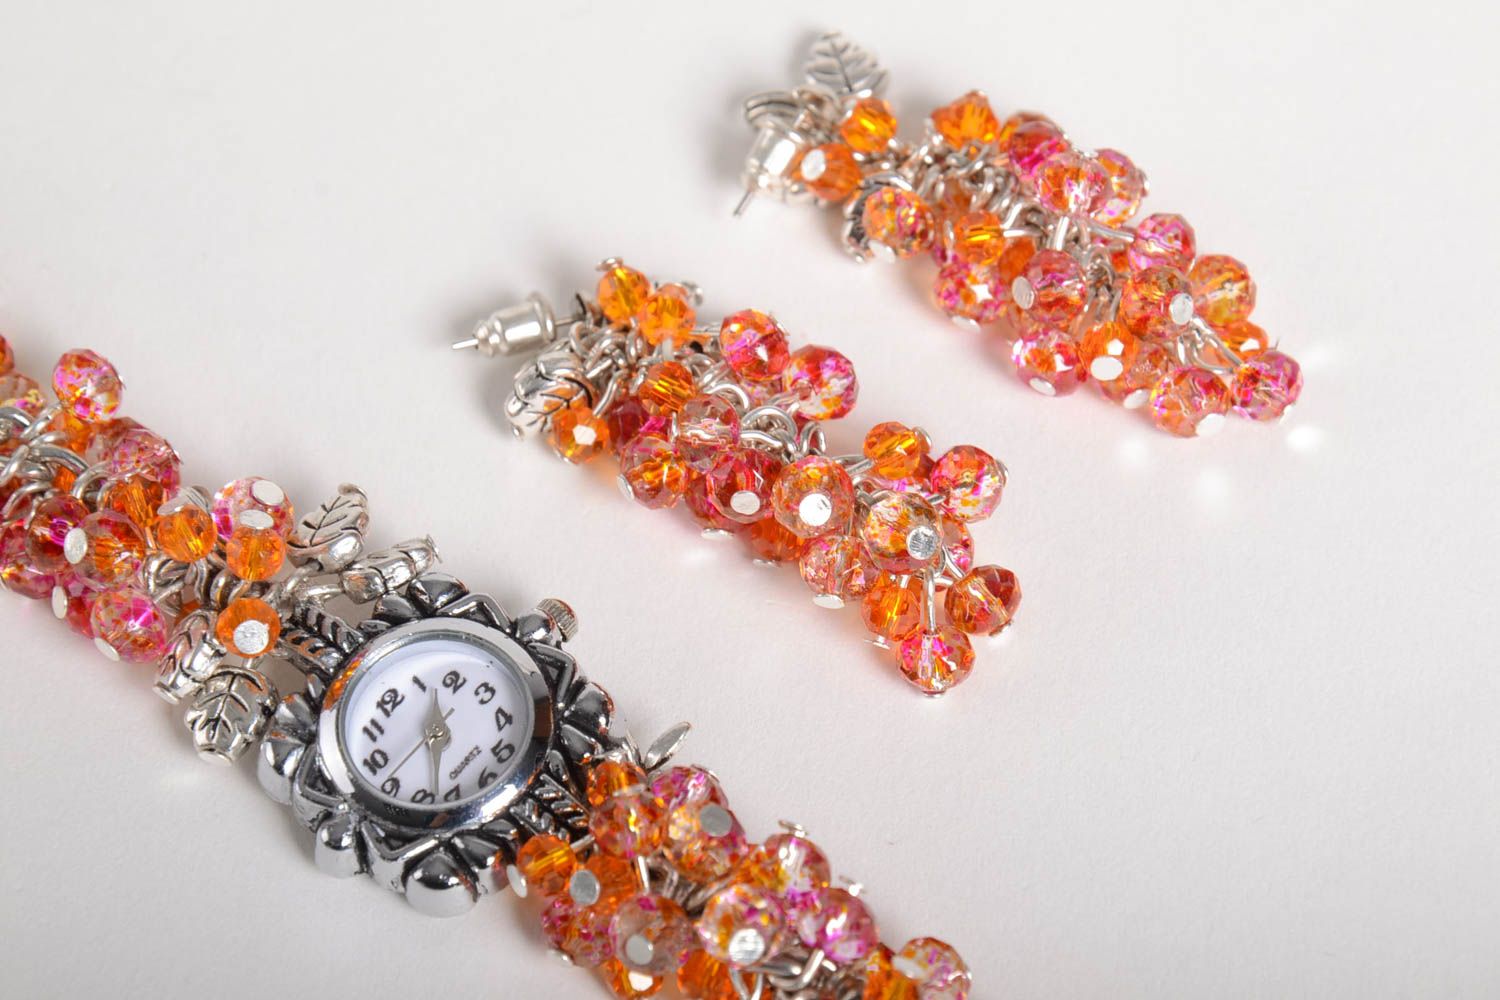 Unusual handmade beaded earrings wrist watch bacelet designs gifts for her photo 3